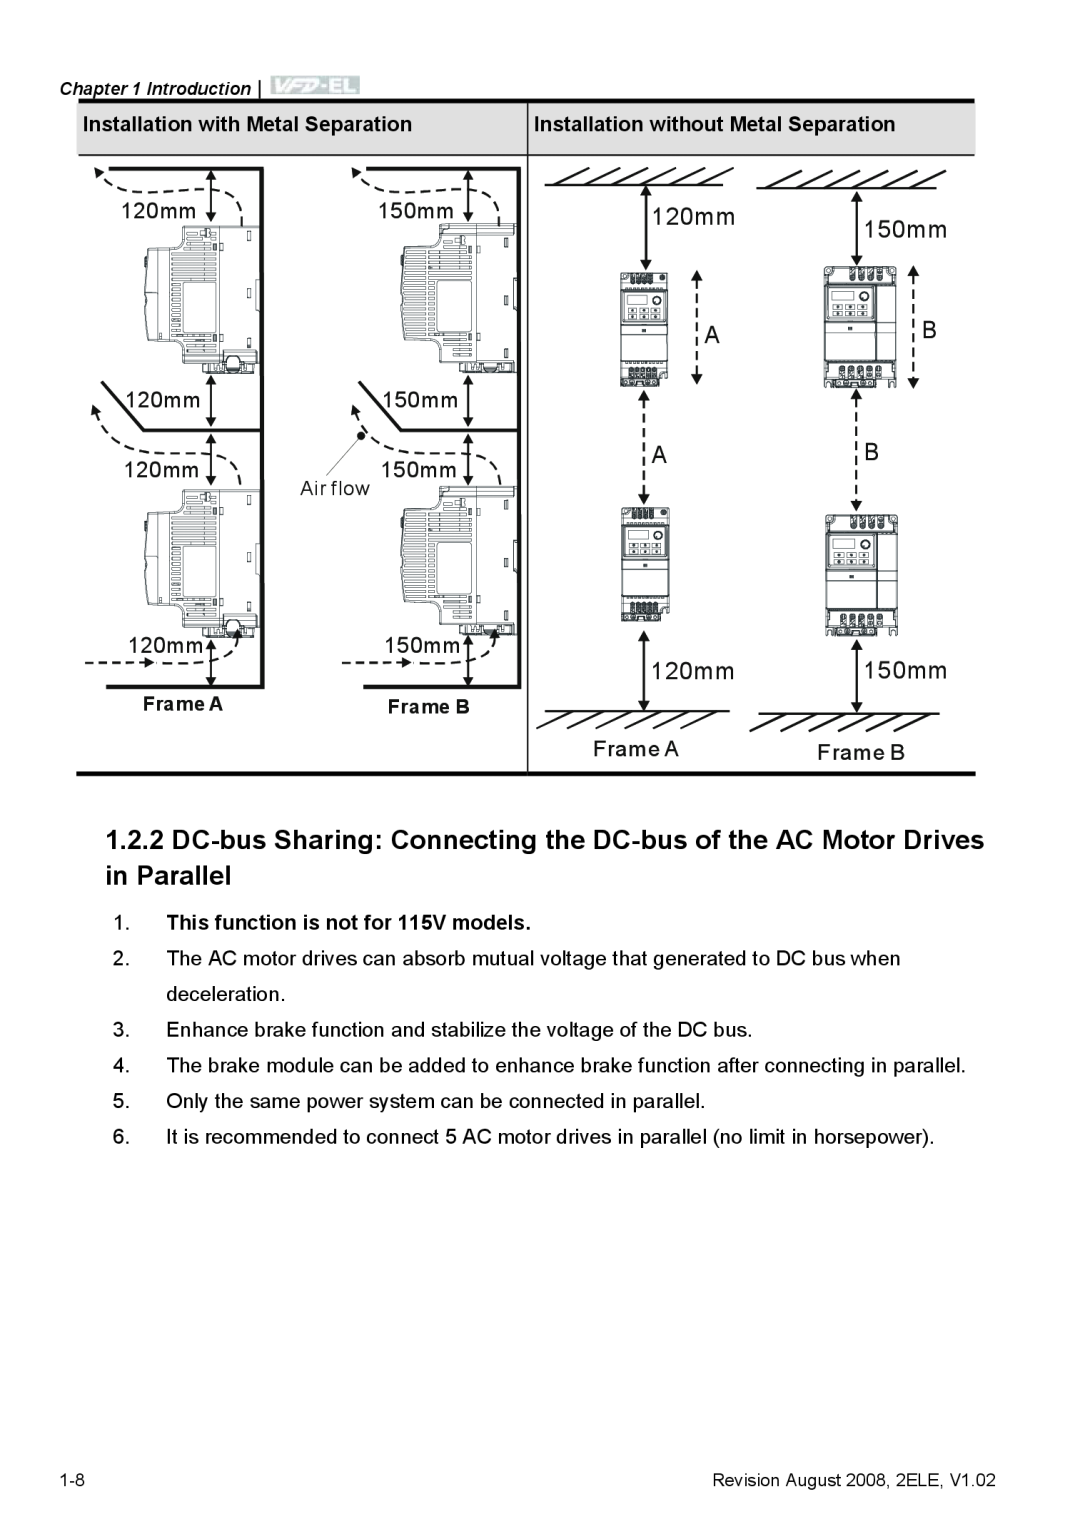 Delta Electronics VFD-EL manual 120mm, 150mm, Installation with Metal Separation, Frame A, Frame B 